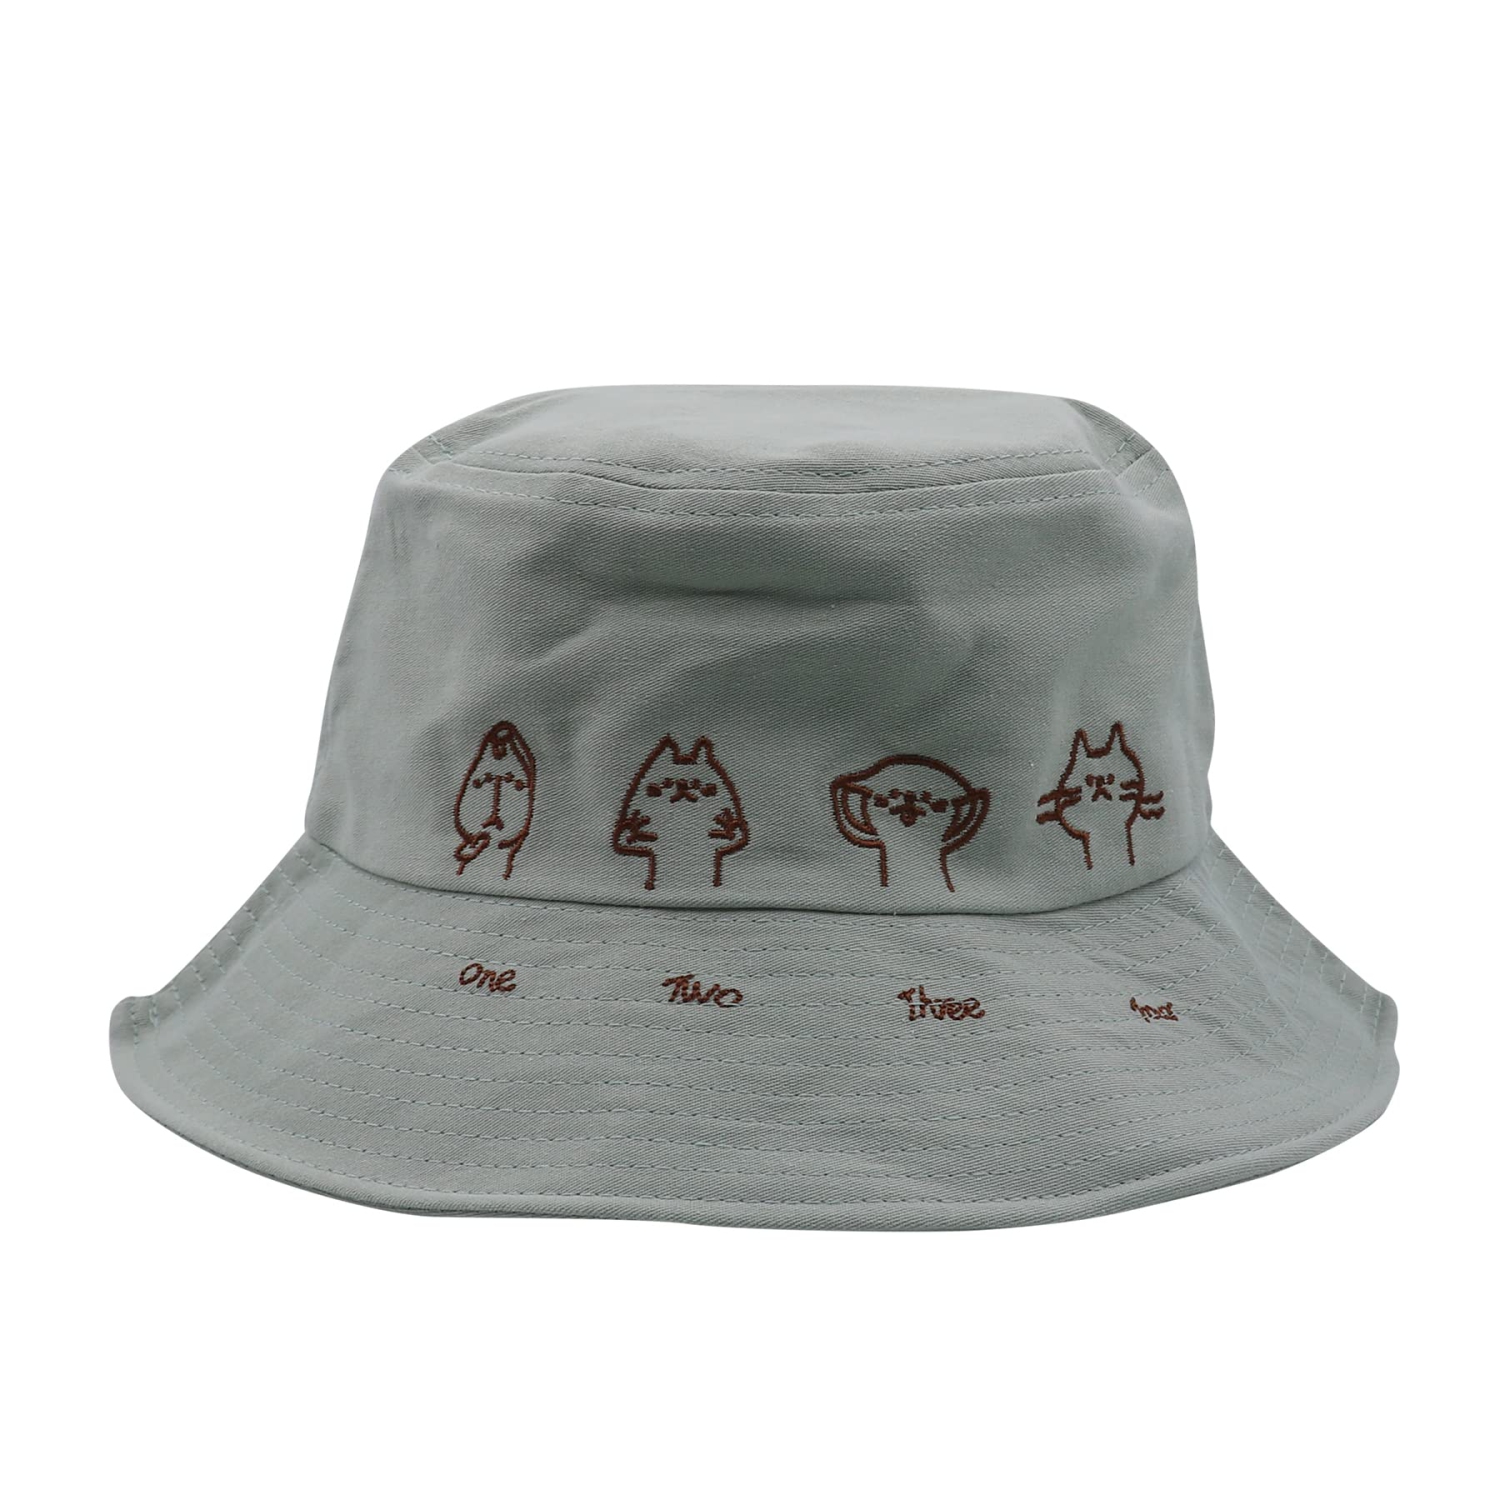 Cute Cat Bucket Hat for Women Girls - Wide Brim Fisherman Cap